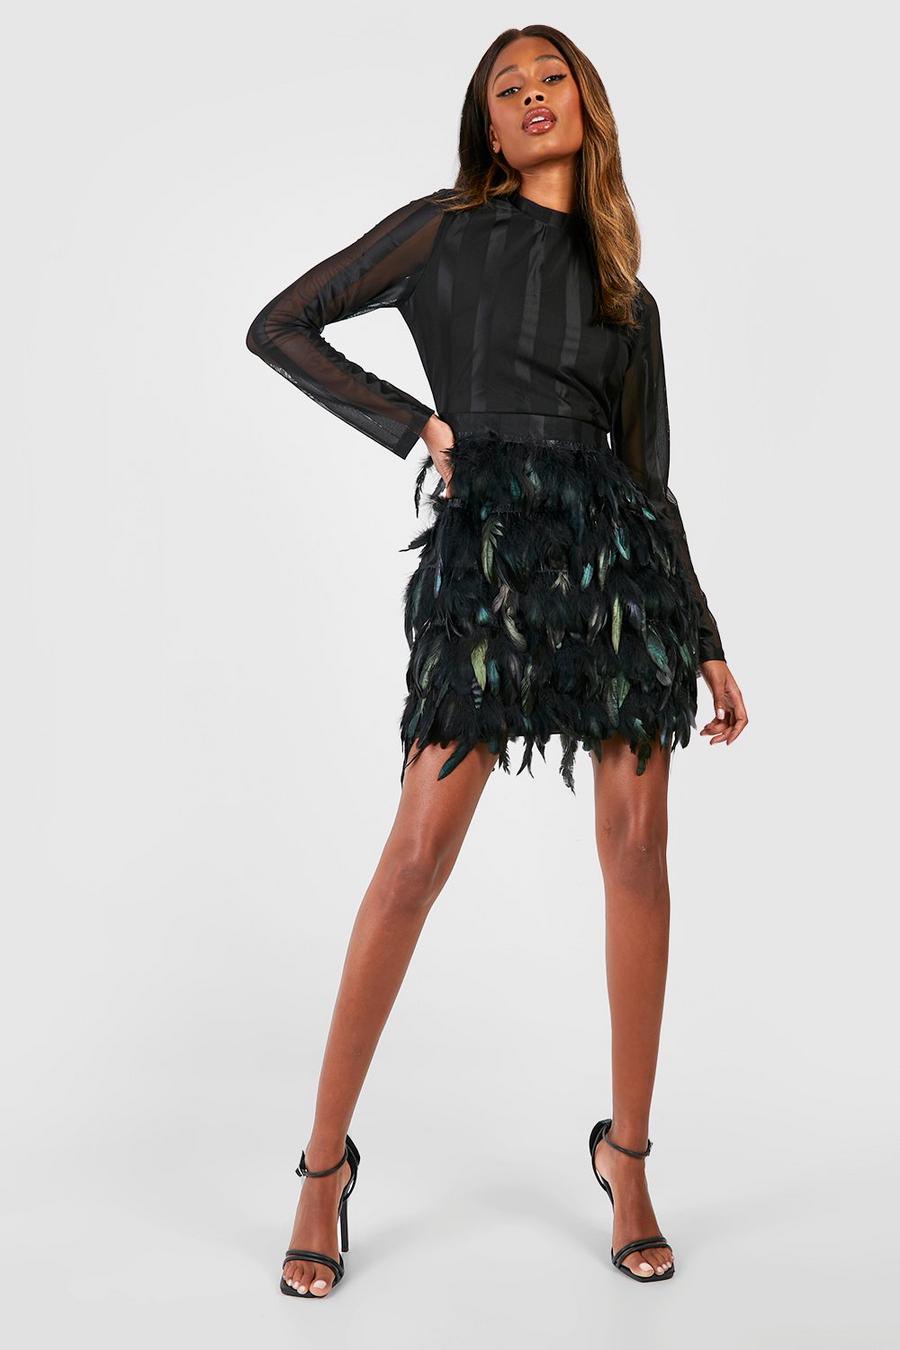 Black High Neck Feather Skirt Mini Party Dress